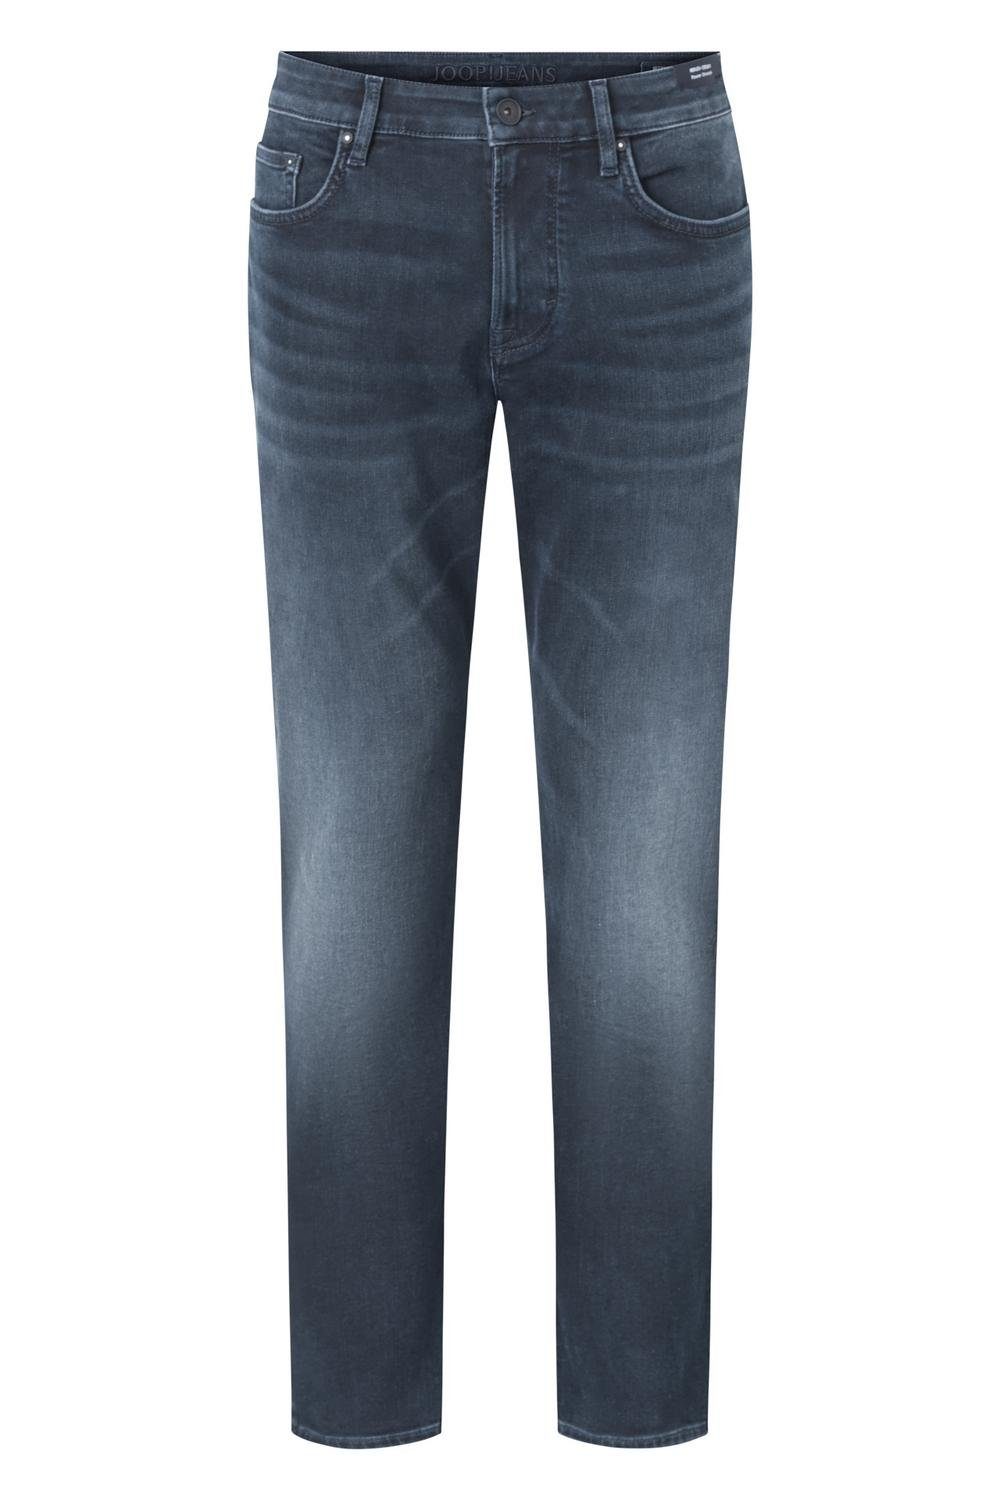 15 Mitch_NOS 10014510 Jeans Regular-fit-Jeans Joop